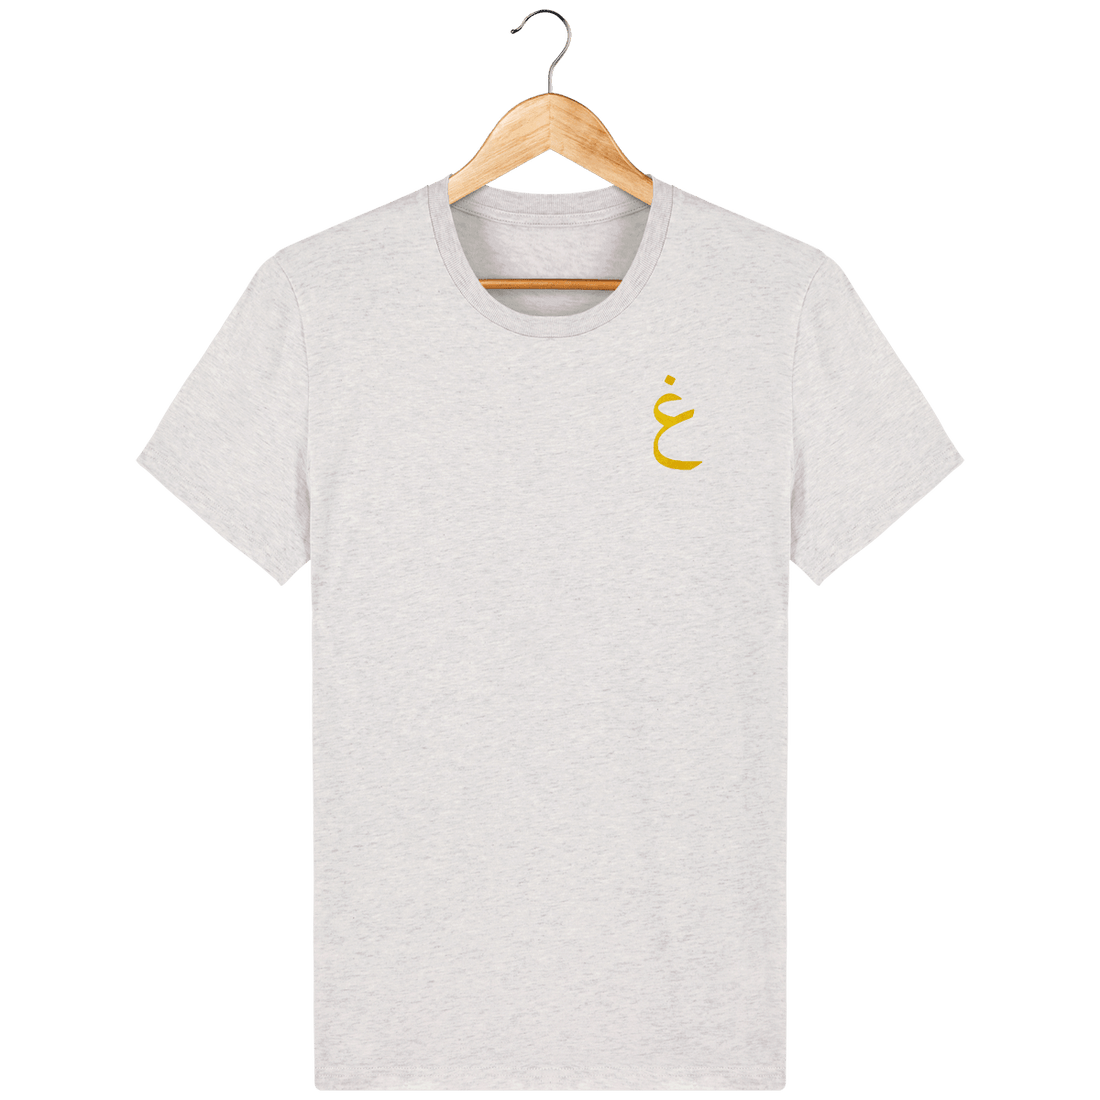 Unisexe>Tee-shirts - T-Shirt Homme <br> Lettre Arabe Ghayn